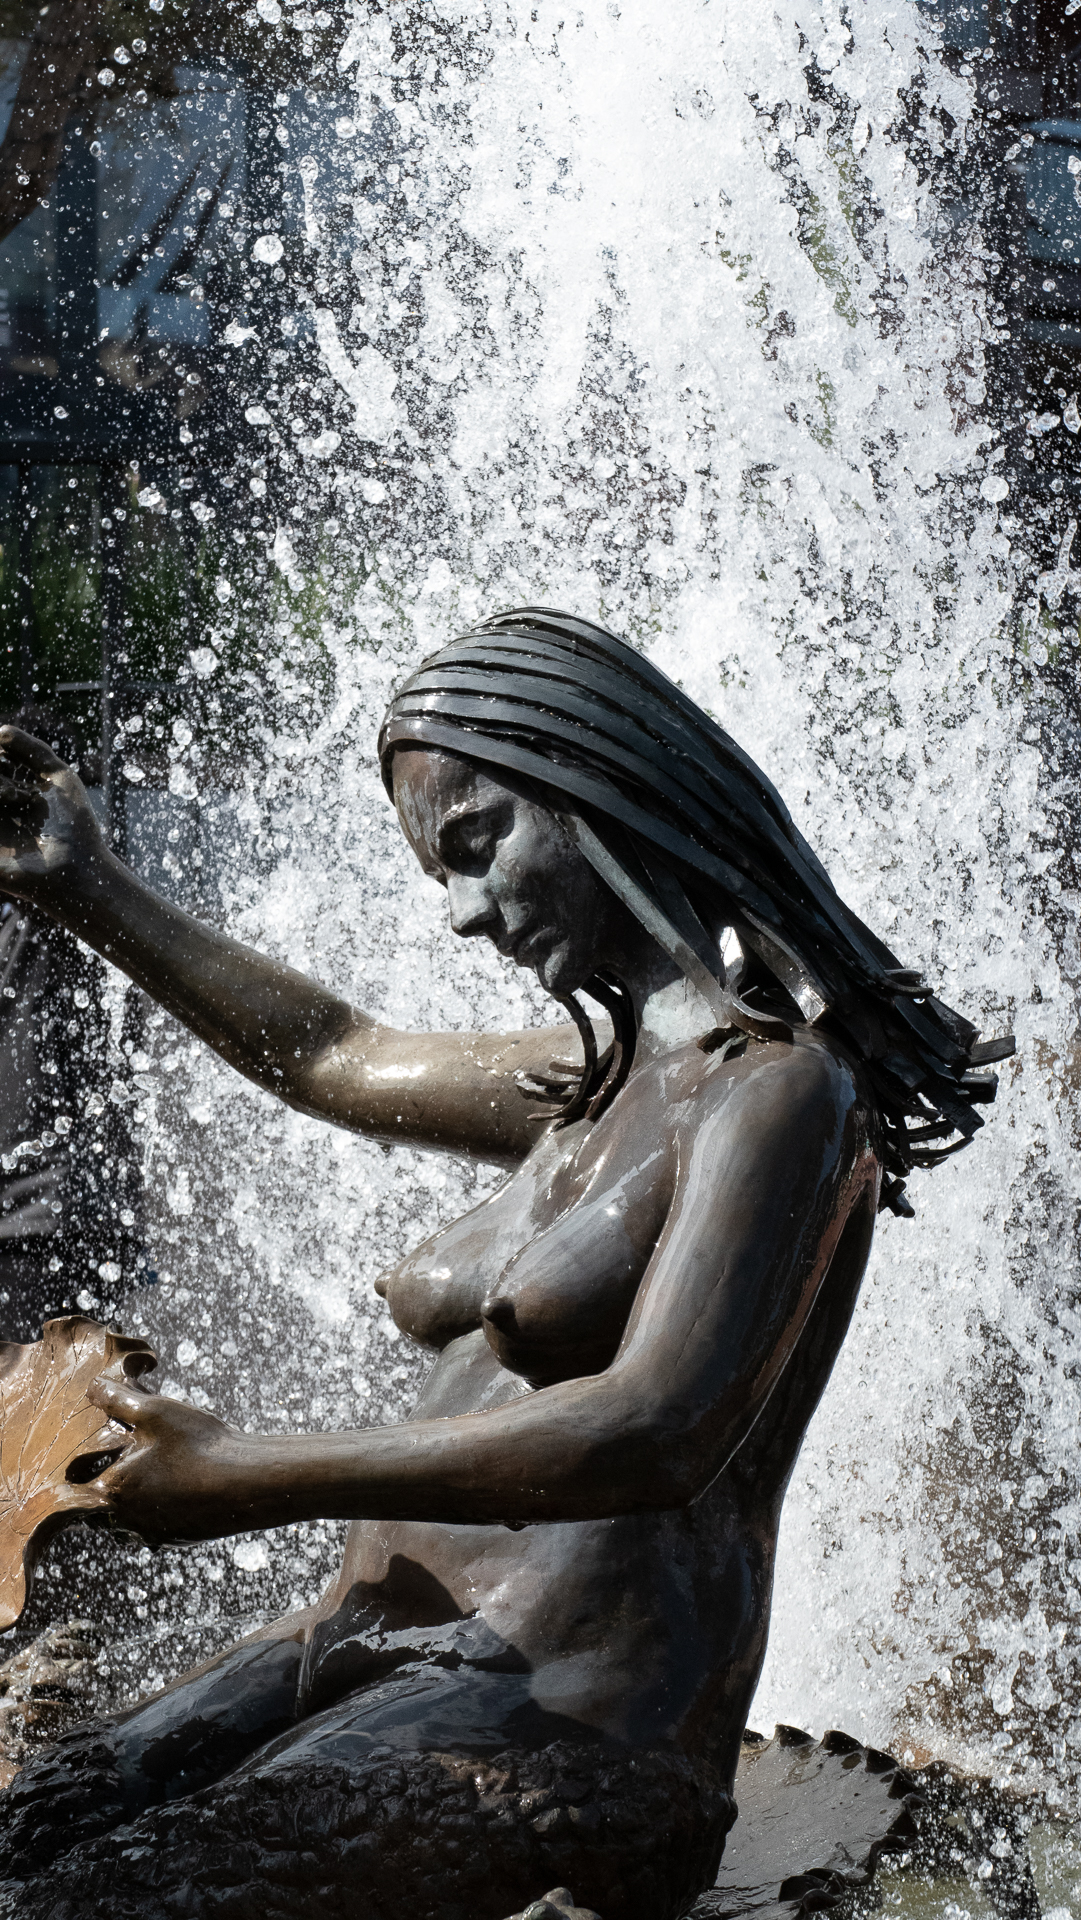 Ruth Asawas mermaid statues in Ghirardelli Square